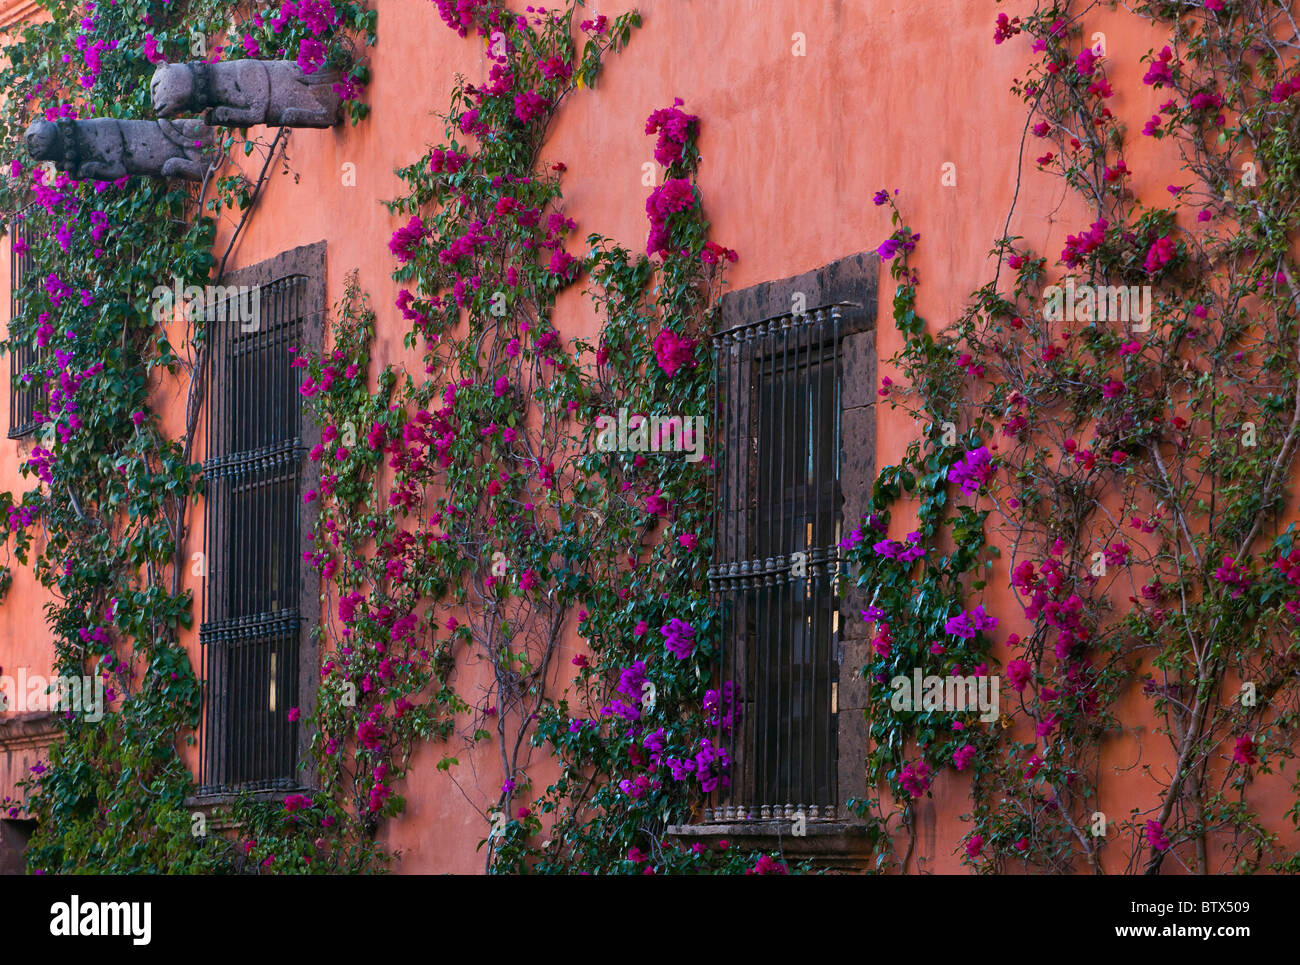 BOUGAINVILLEA (Bougainvillea glabra) grows on the colorfulc walls of SAN MIGUEL DE ALLENDE, MEXICO Stock Photo